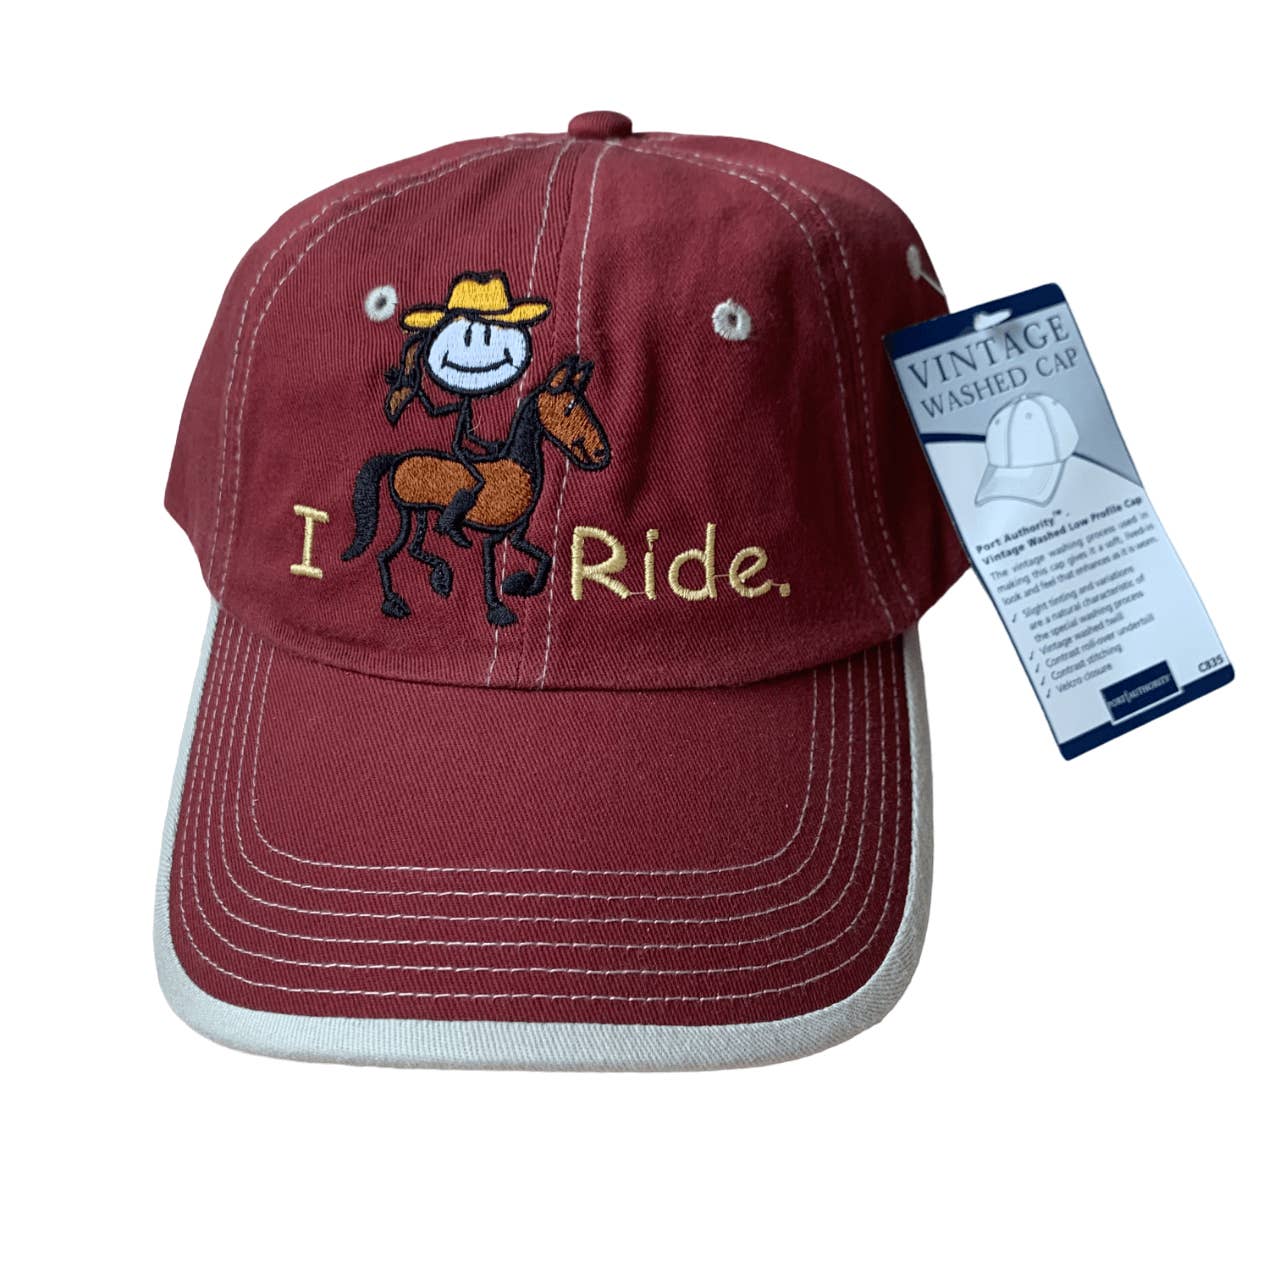 'I Ride' Embroidered Baseball Cap